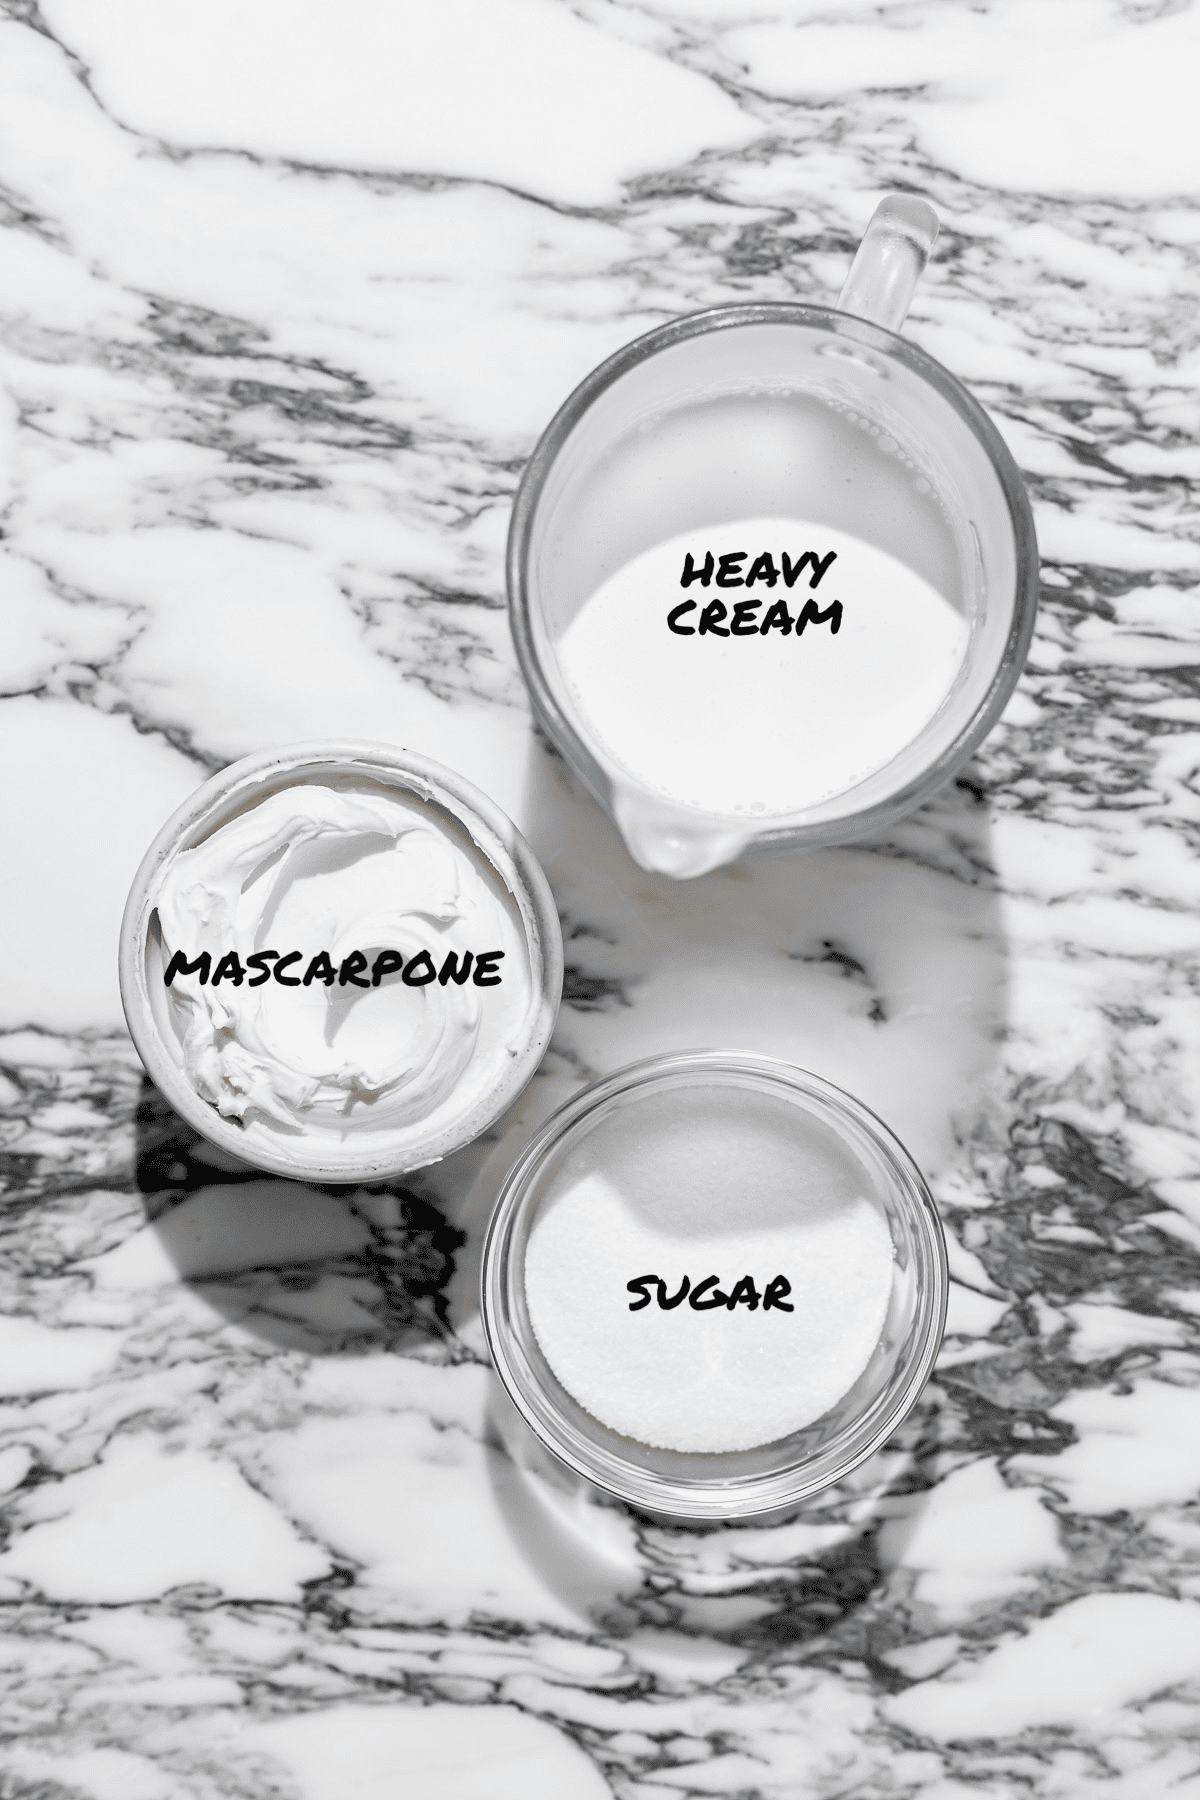 ingredients for mascarpone frosting.